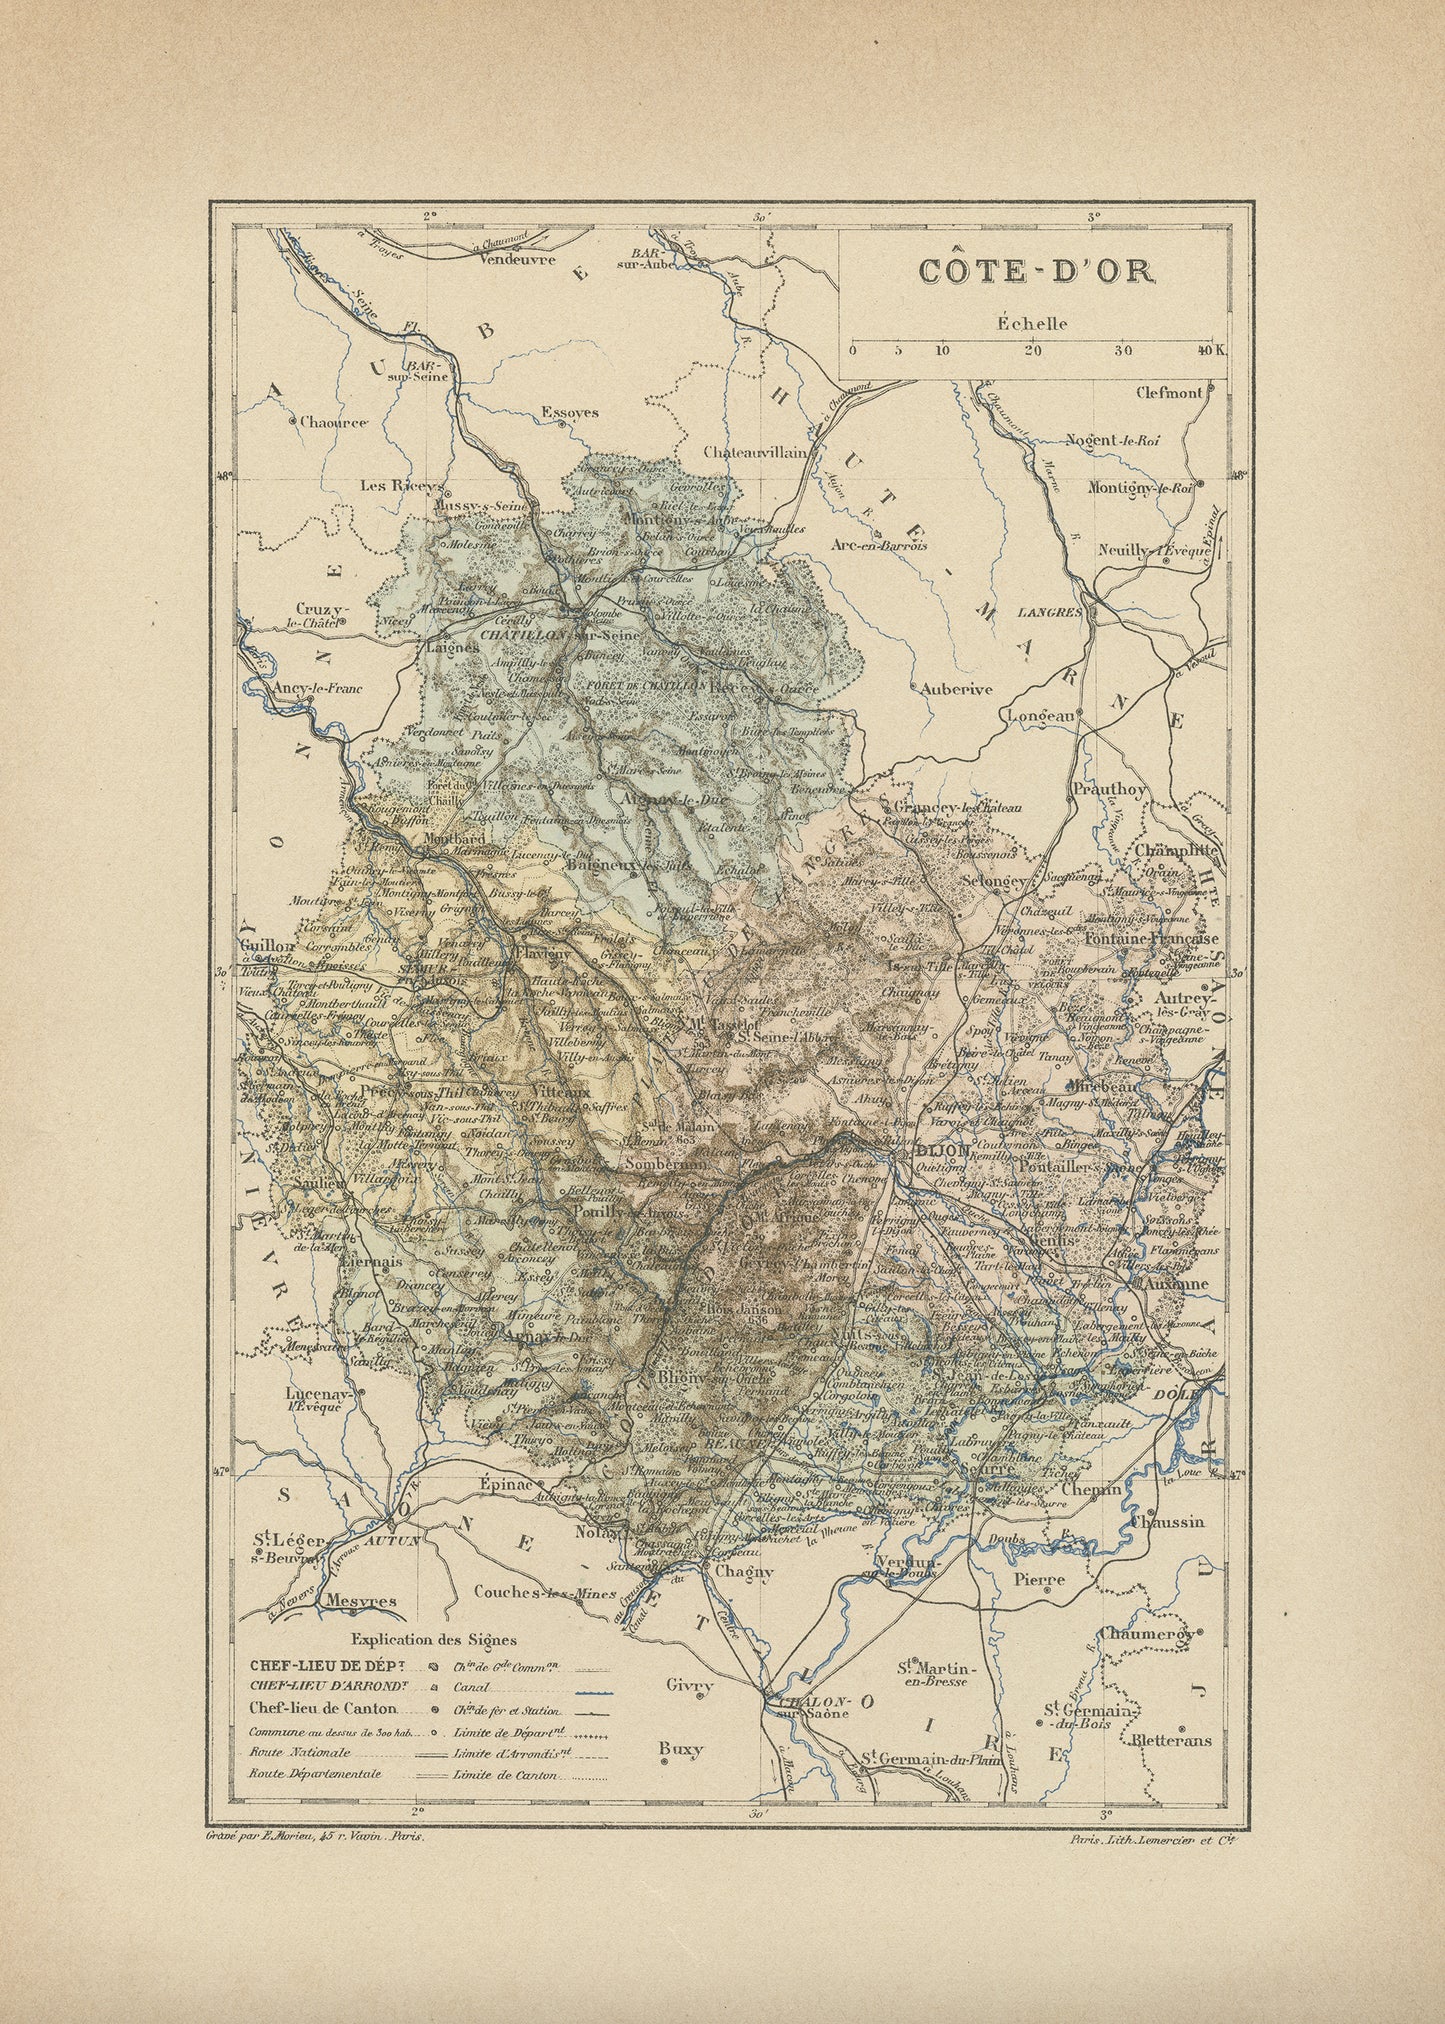 1892 Antique Map of Cote d'Or - France